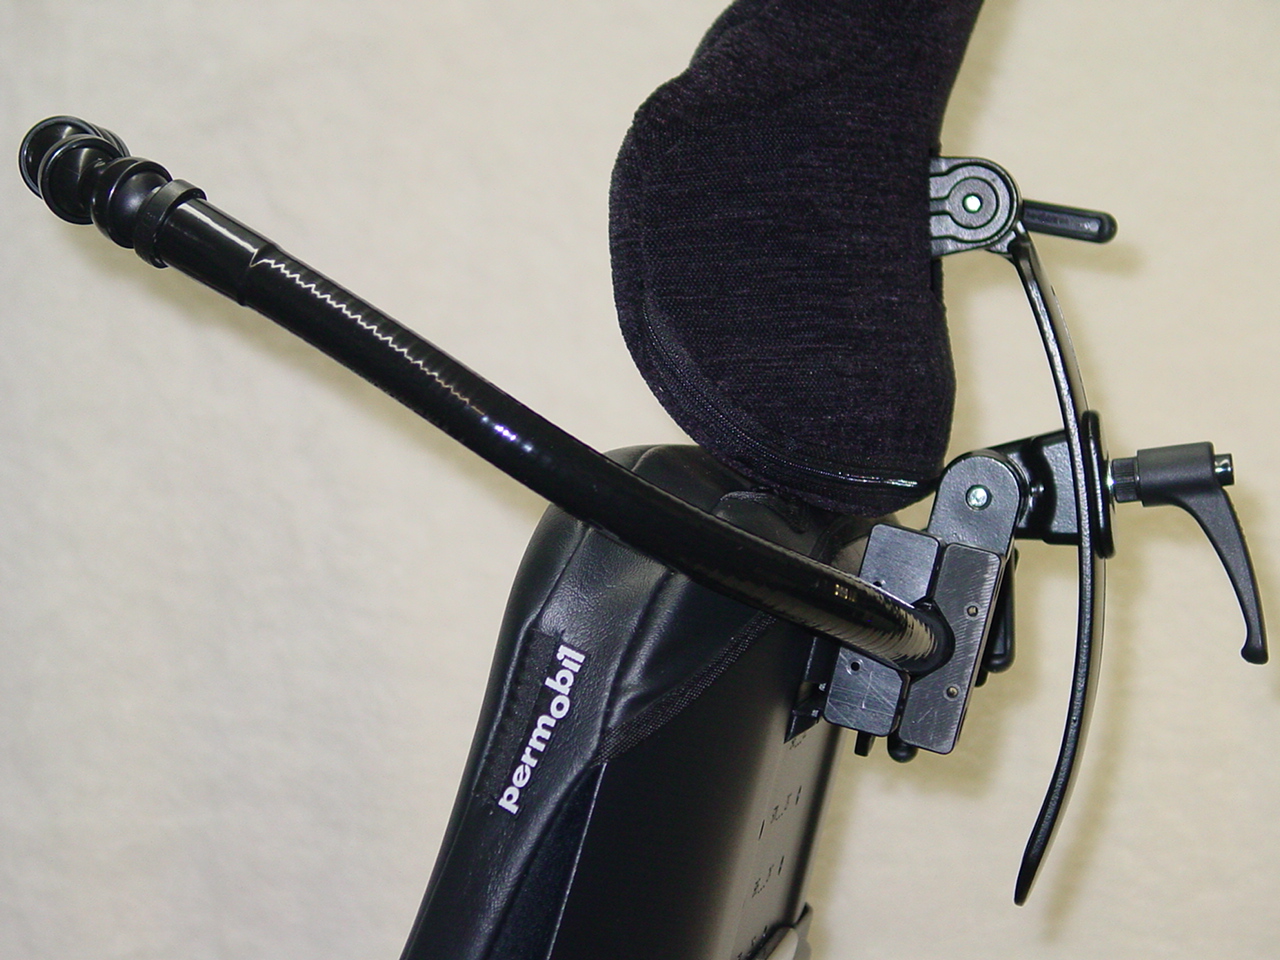 Flex Arm Mounting System with 12-Inch Flex Arm for UniTrack